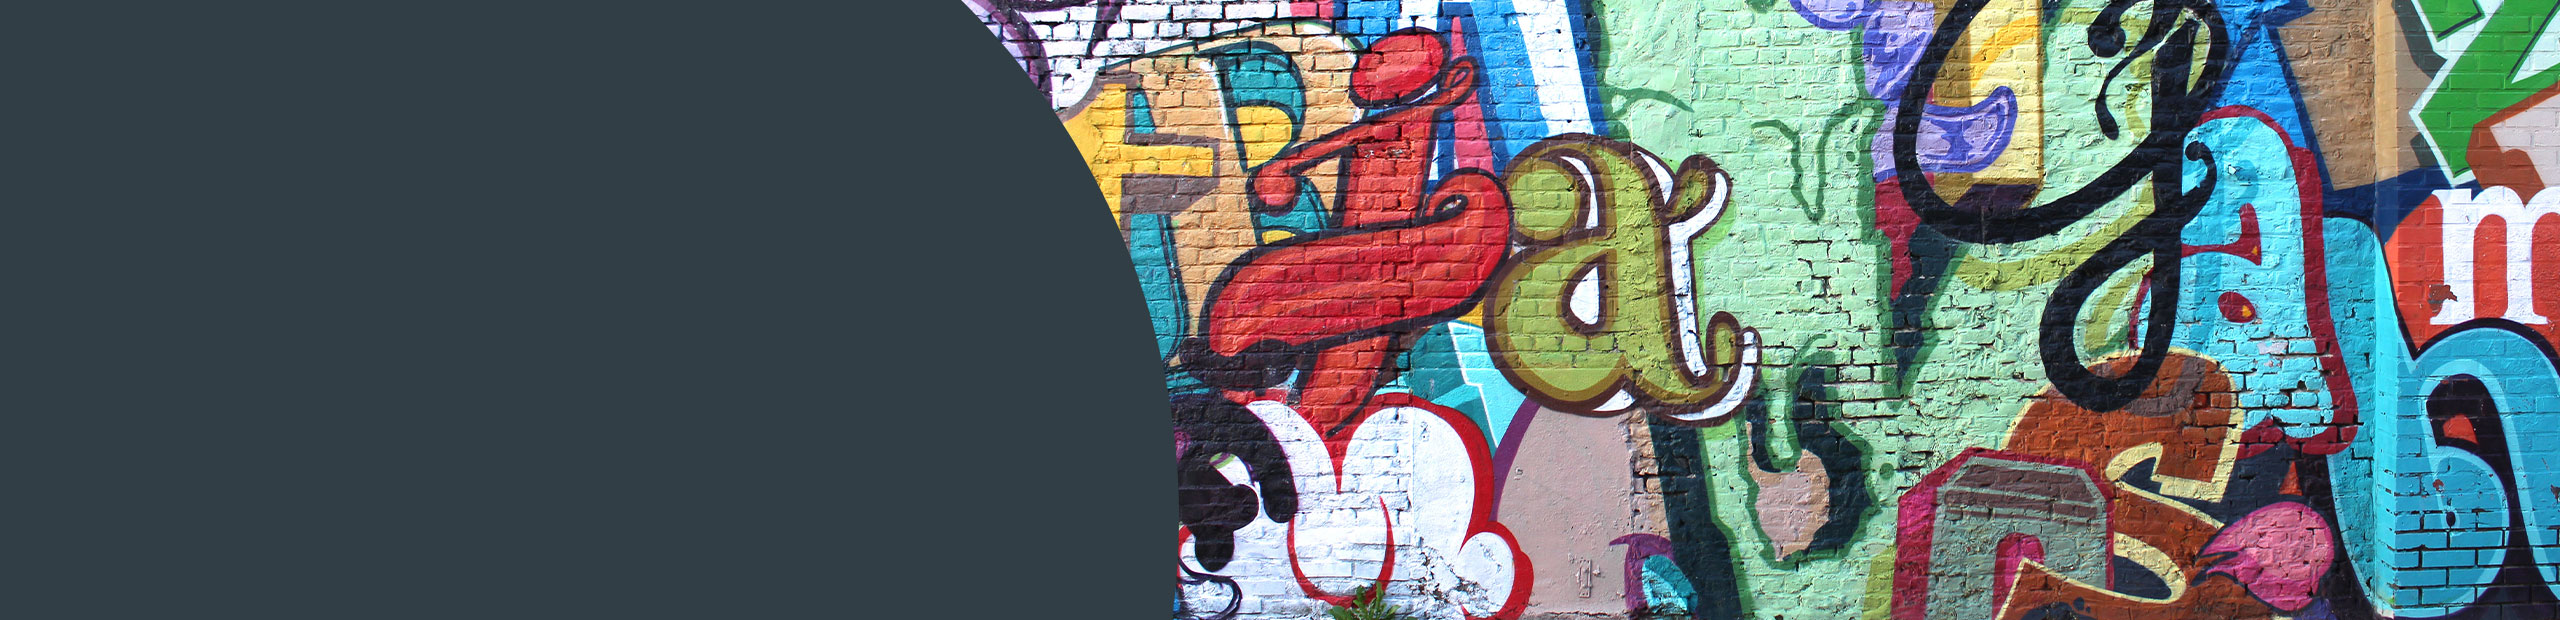 Graffiti Clean Up - Redbridge